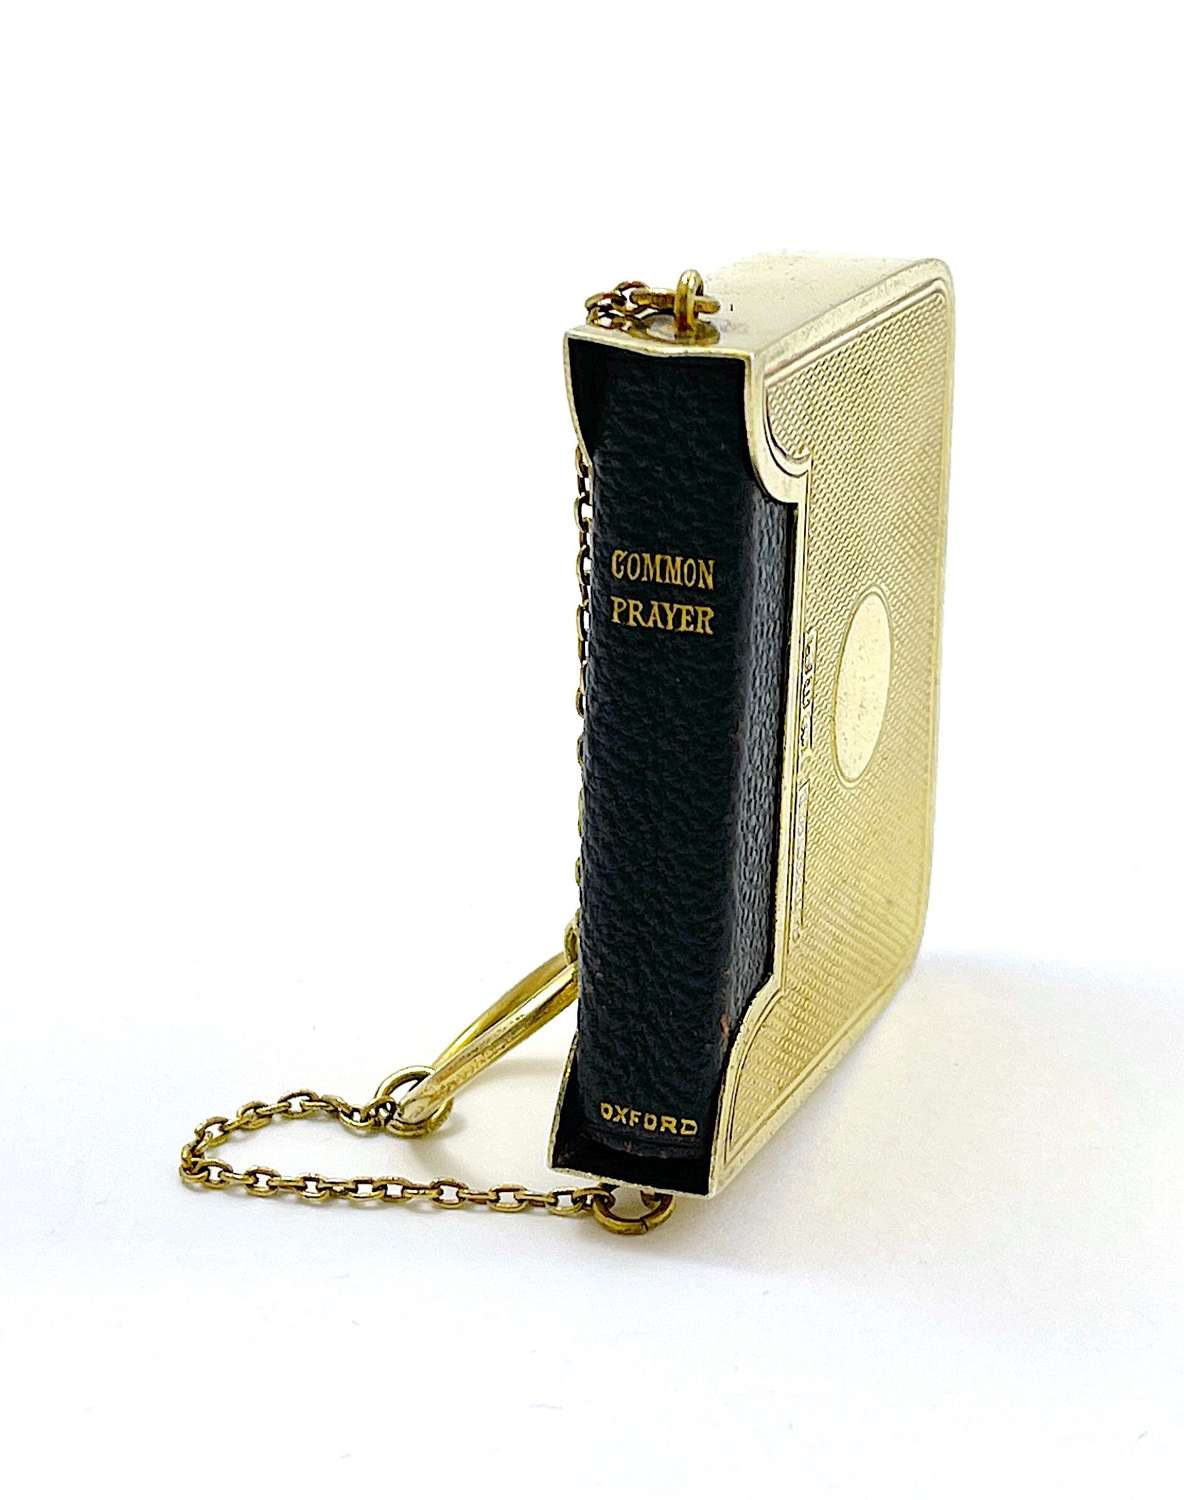 Miniature Antique Prayer Book in Gilded Silver Purse by Alex Jones